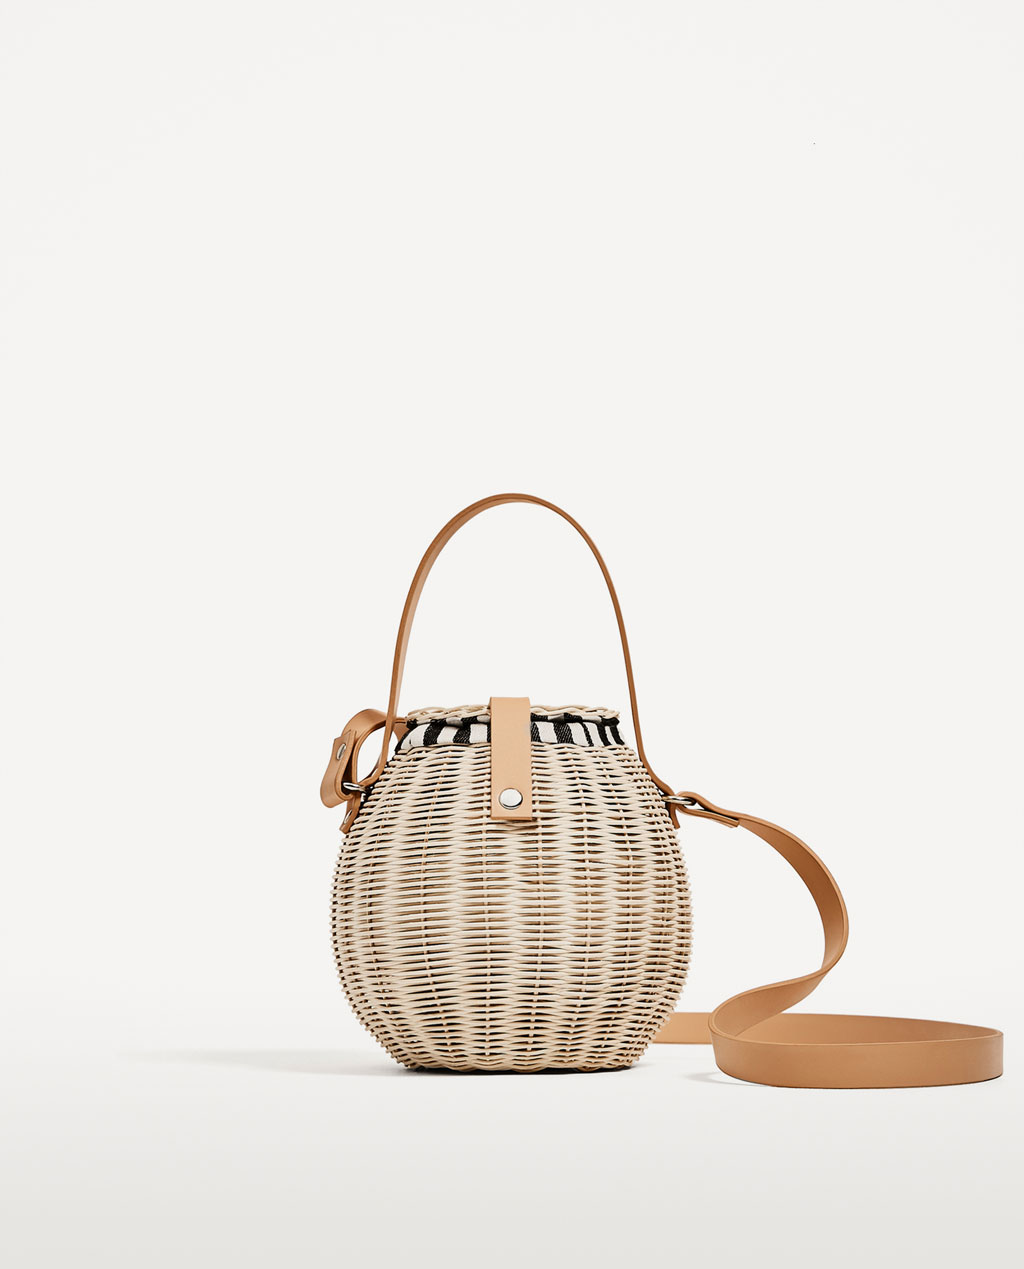 The Other Birkin Bag: Jane Birkin and The Wicker Basket